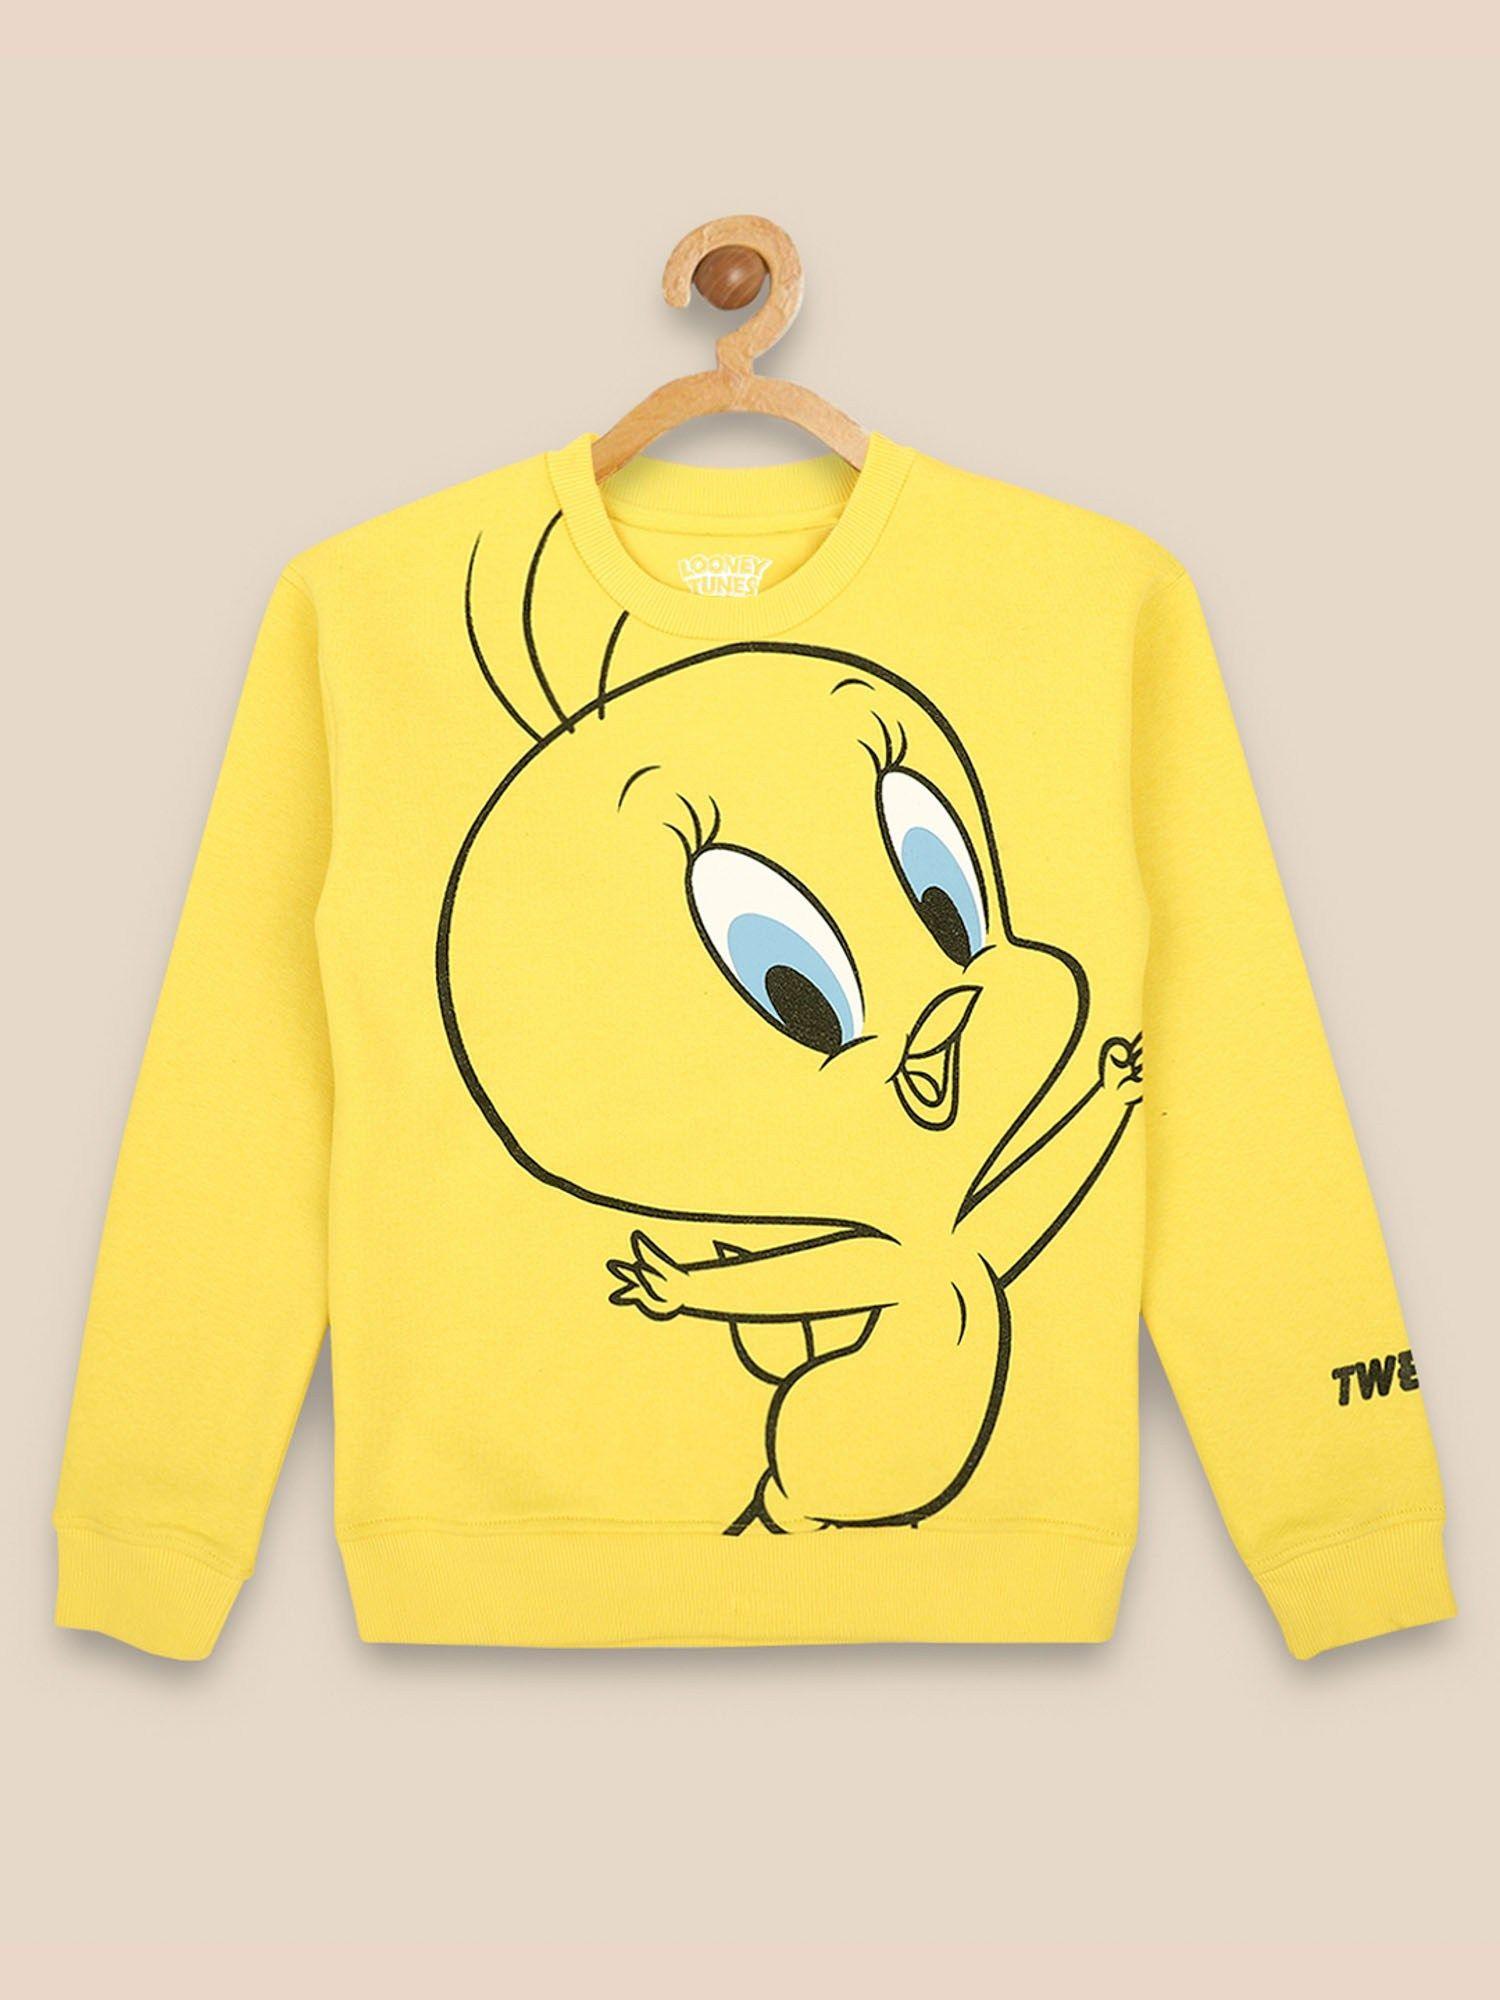 tweety printed yellow sweatshirt for girls